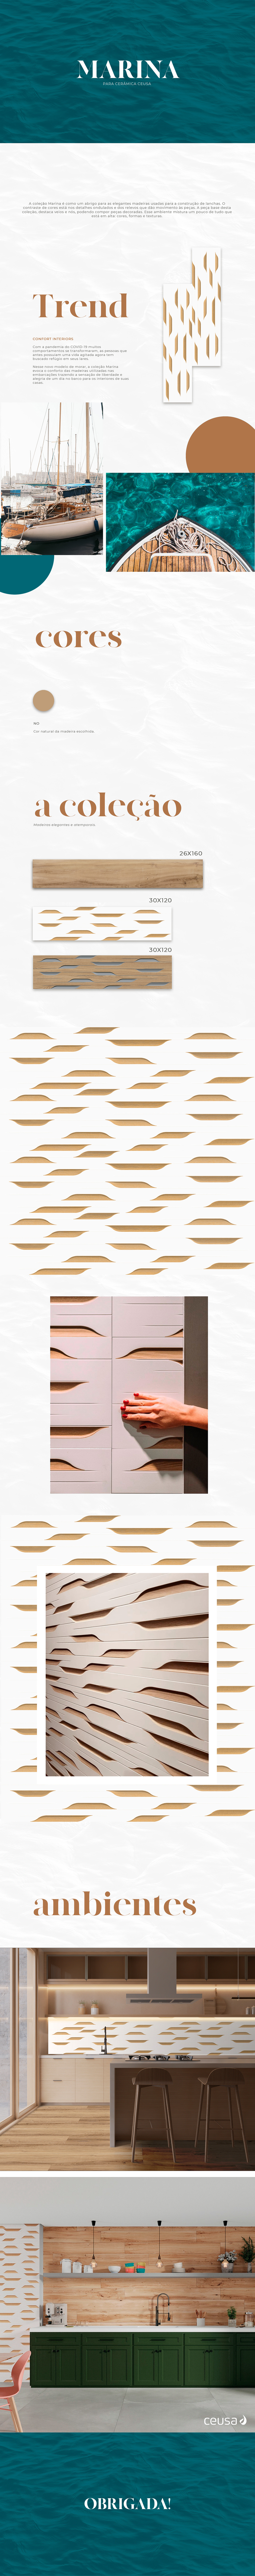 aesthetic ceramic environment Interior surface design tiles wood